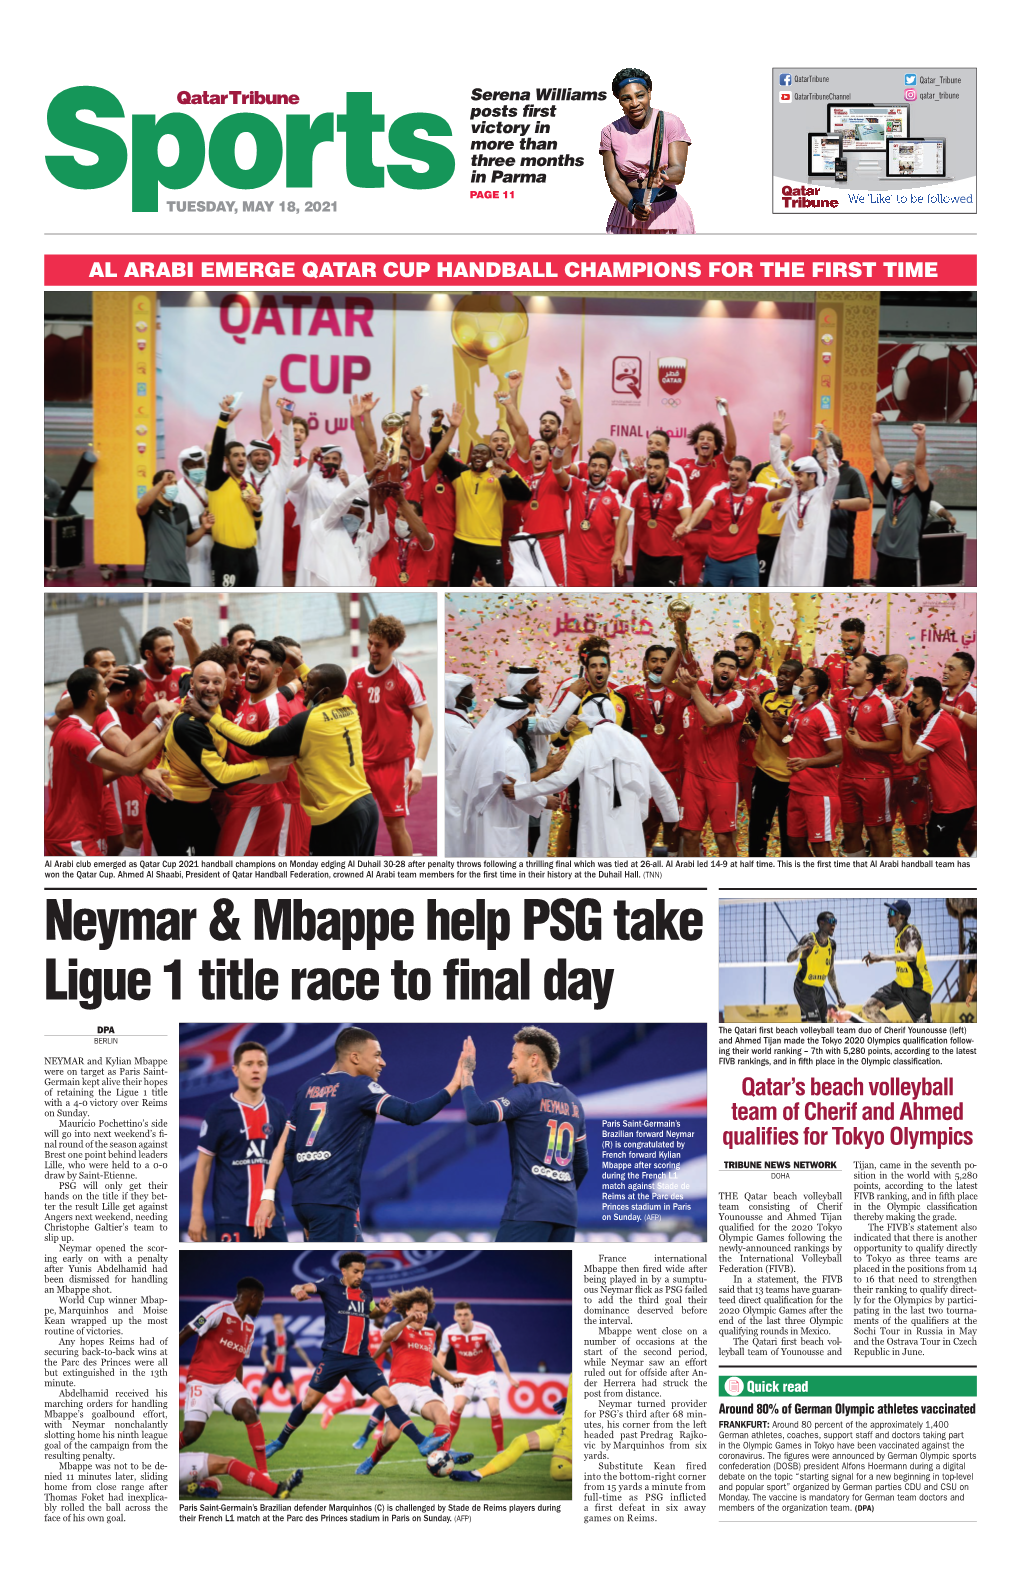 Neymar & Mbappe Help PSG Take Ligue 1 Title Race to Nal